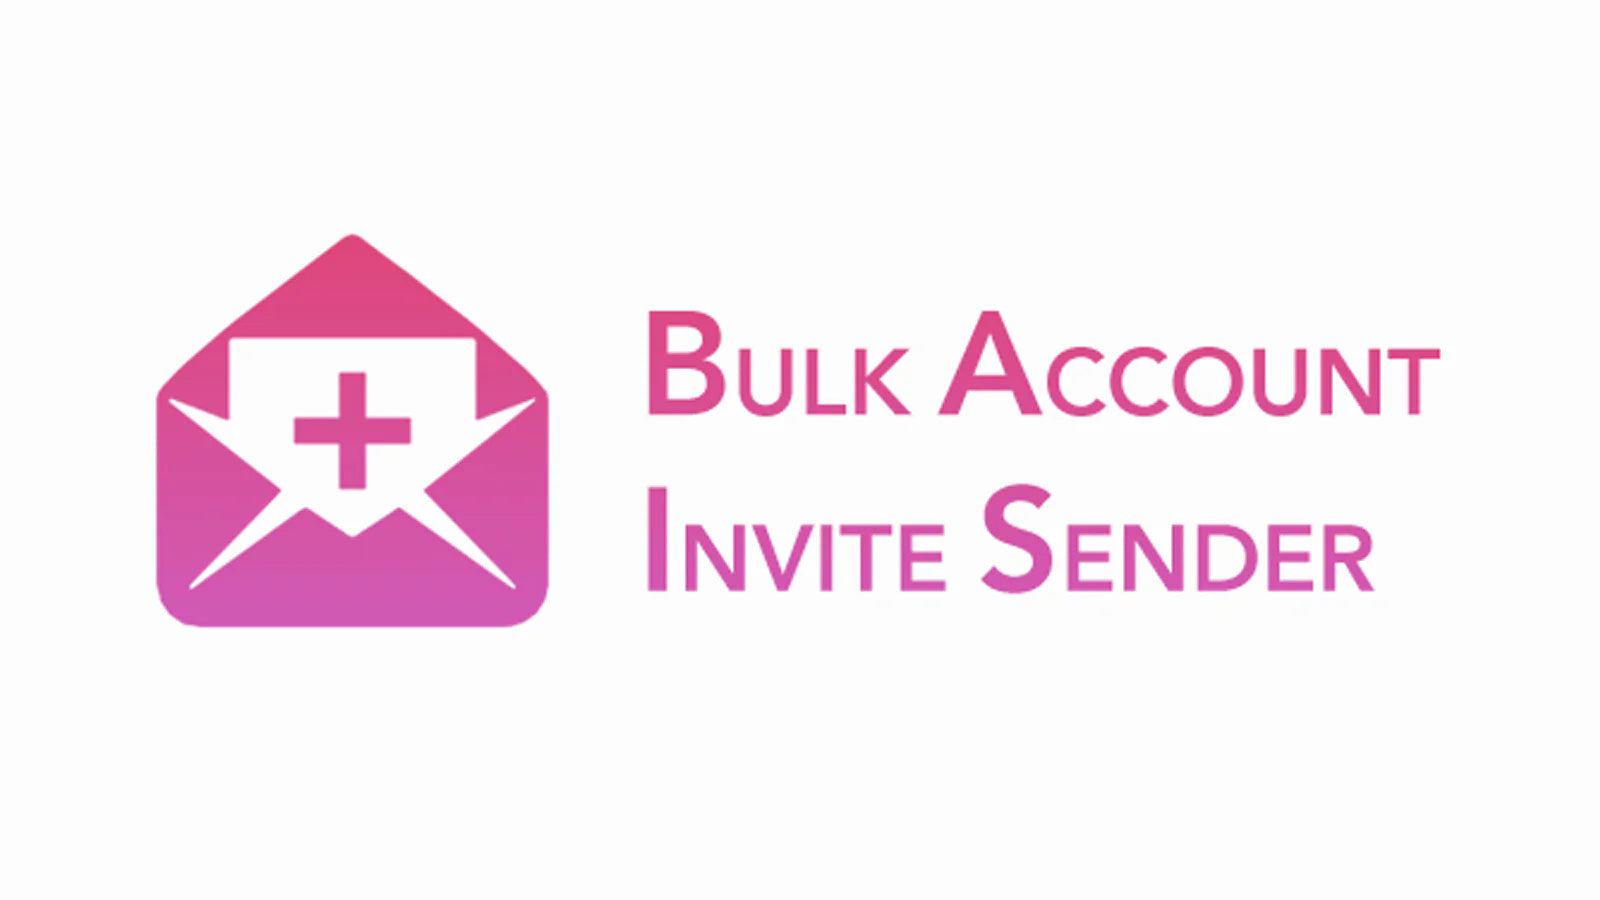 Bulk Account Invite Sender